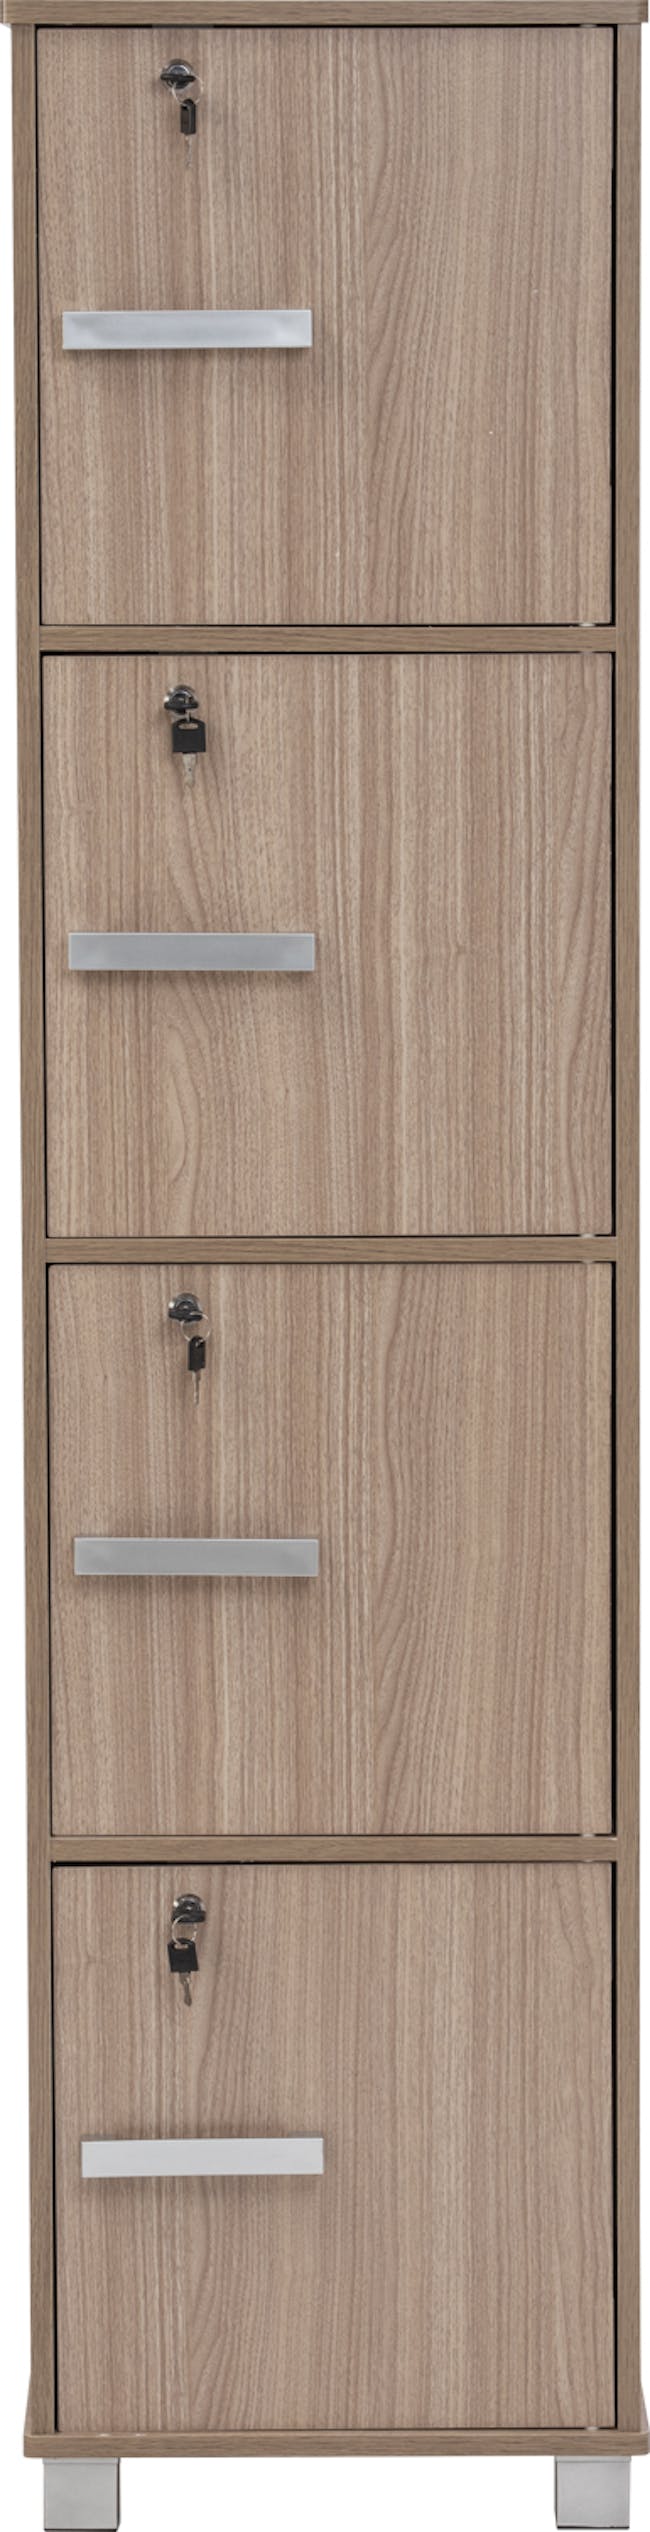 Naya 4 Door Cabinet - Ebonnese - 3